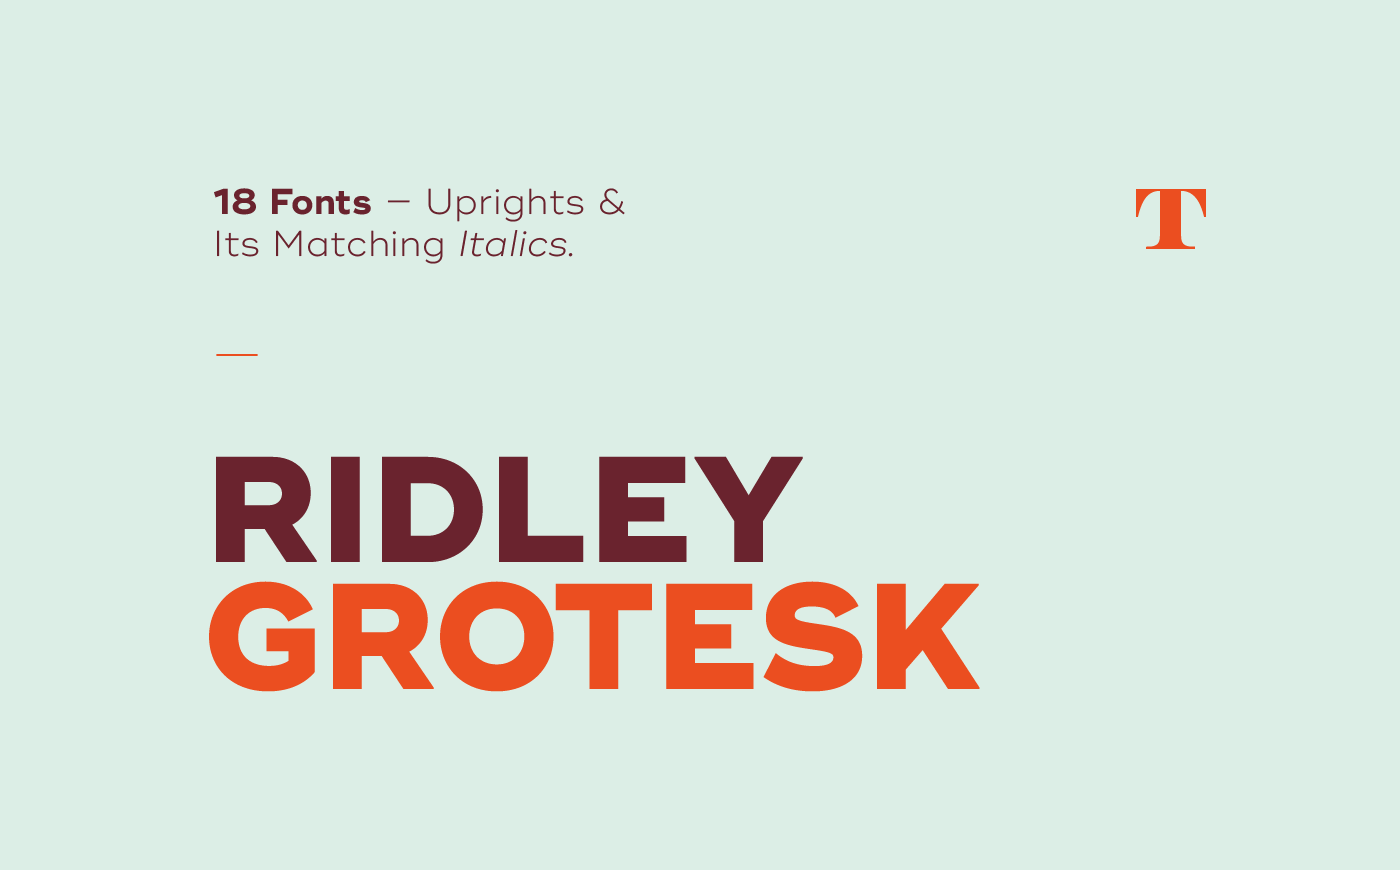 Ridley grotesk semibold font free download